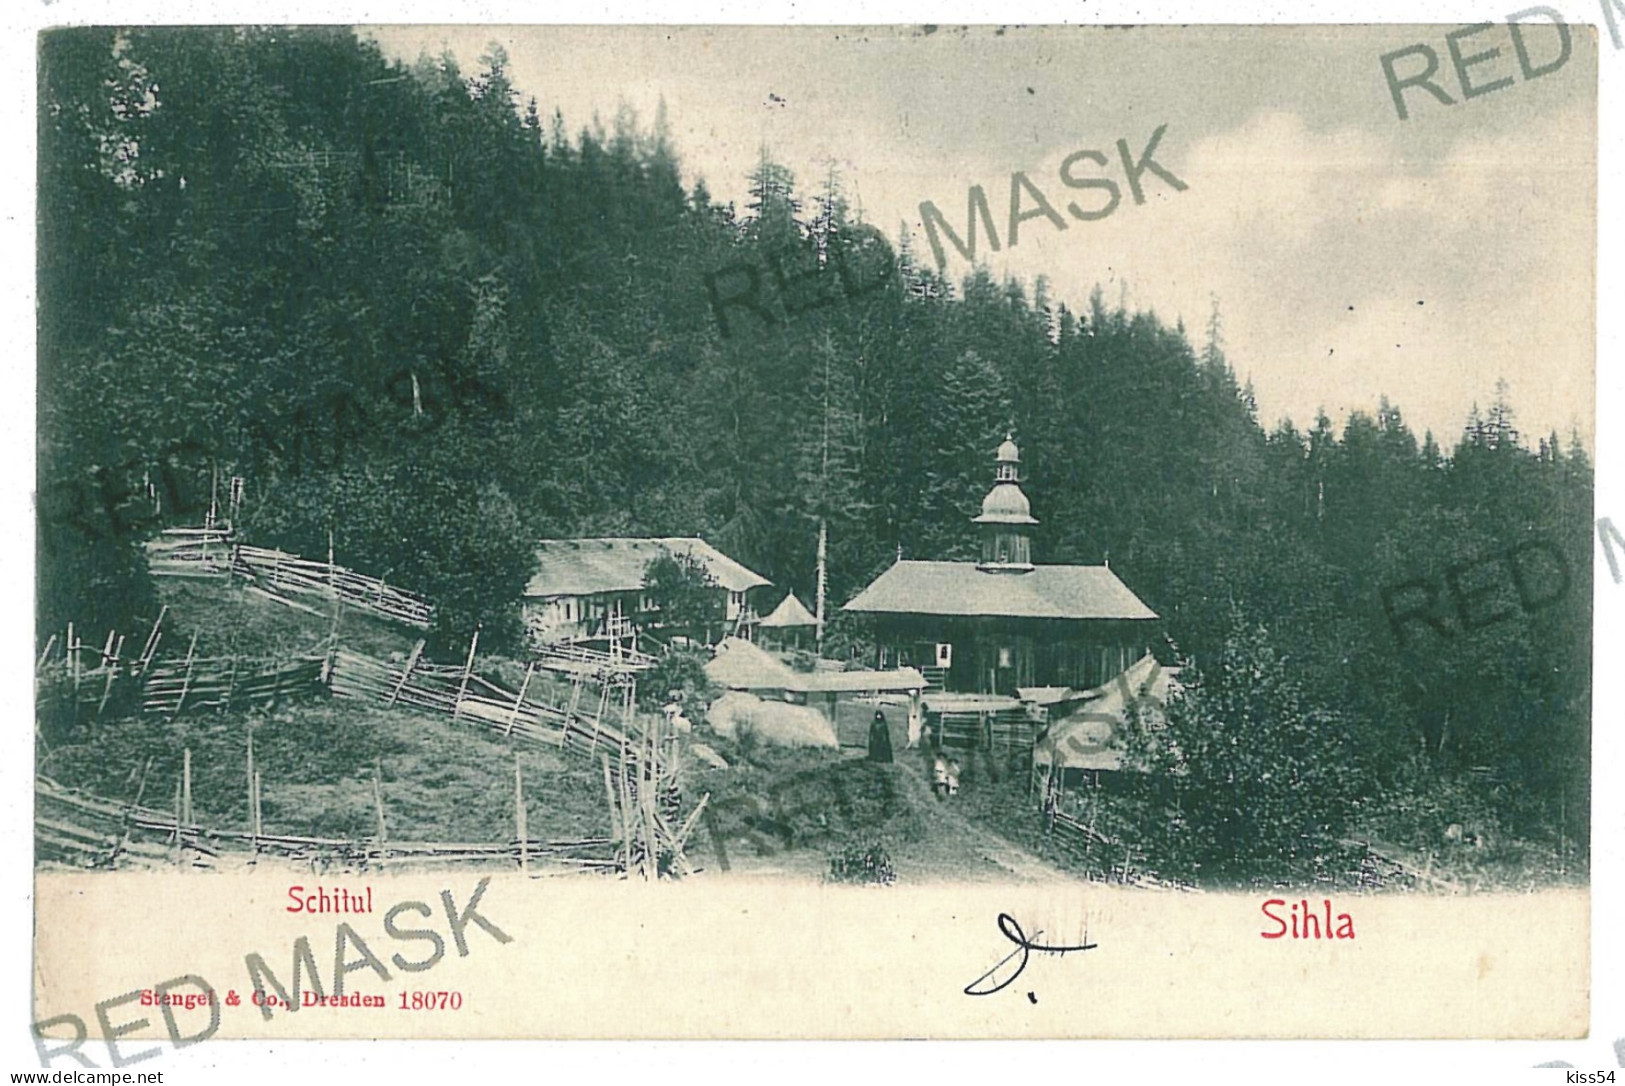 RO 40 - 11748 Schitul SIHLA, Neamt, Romania - Old Postcard - Used - 1906 - Romania